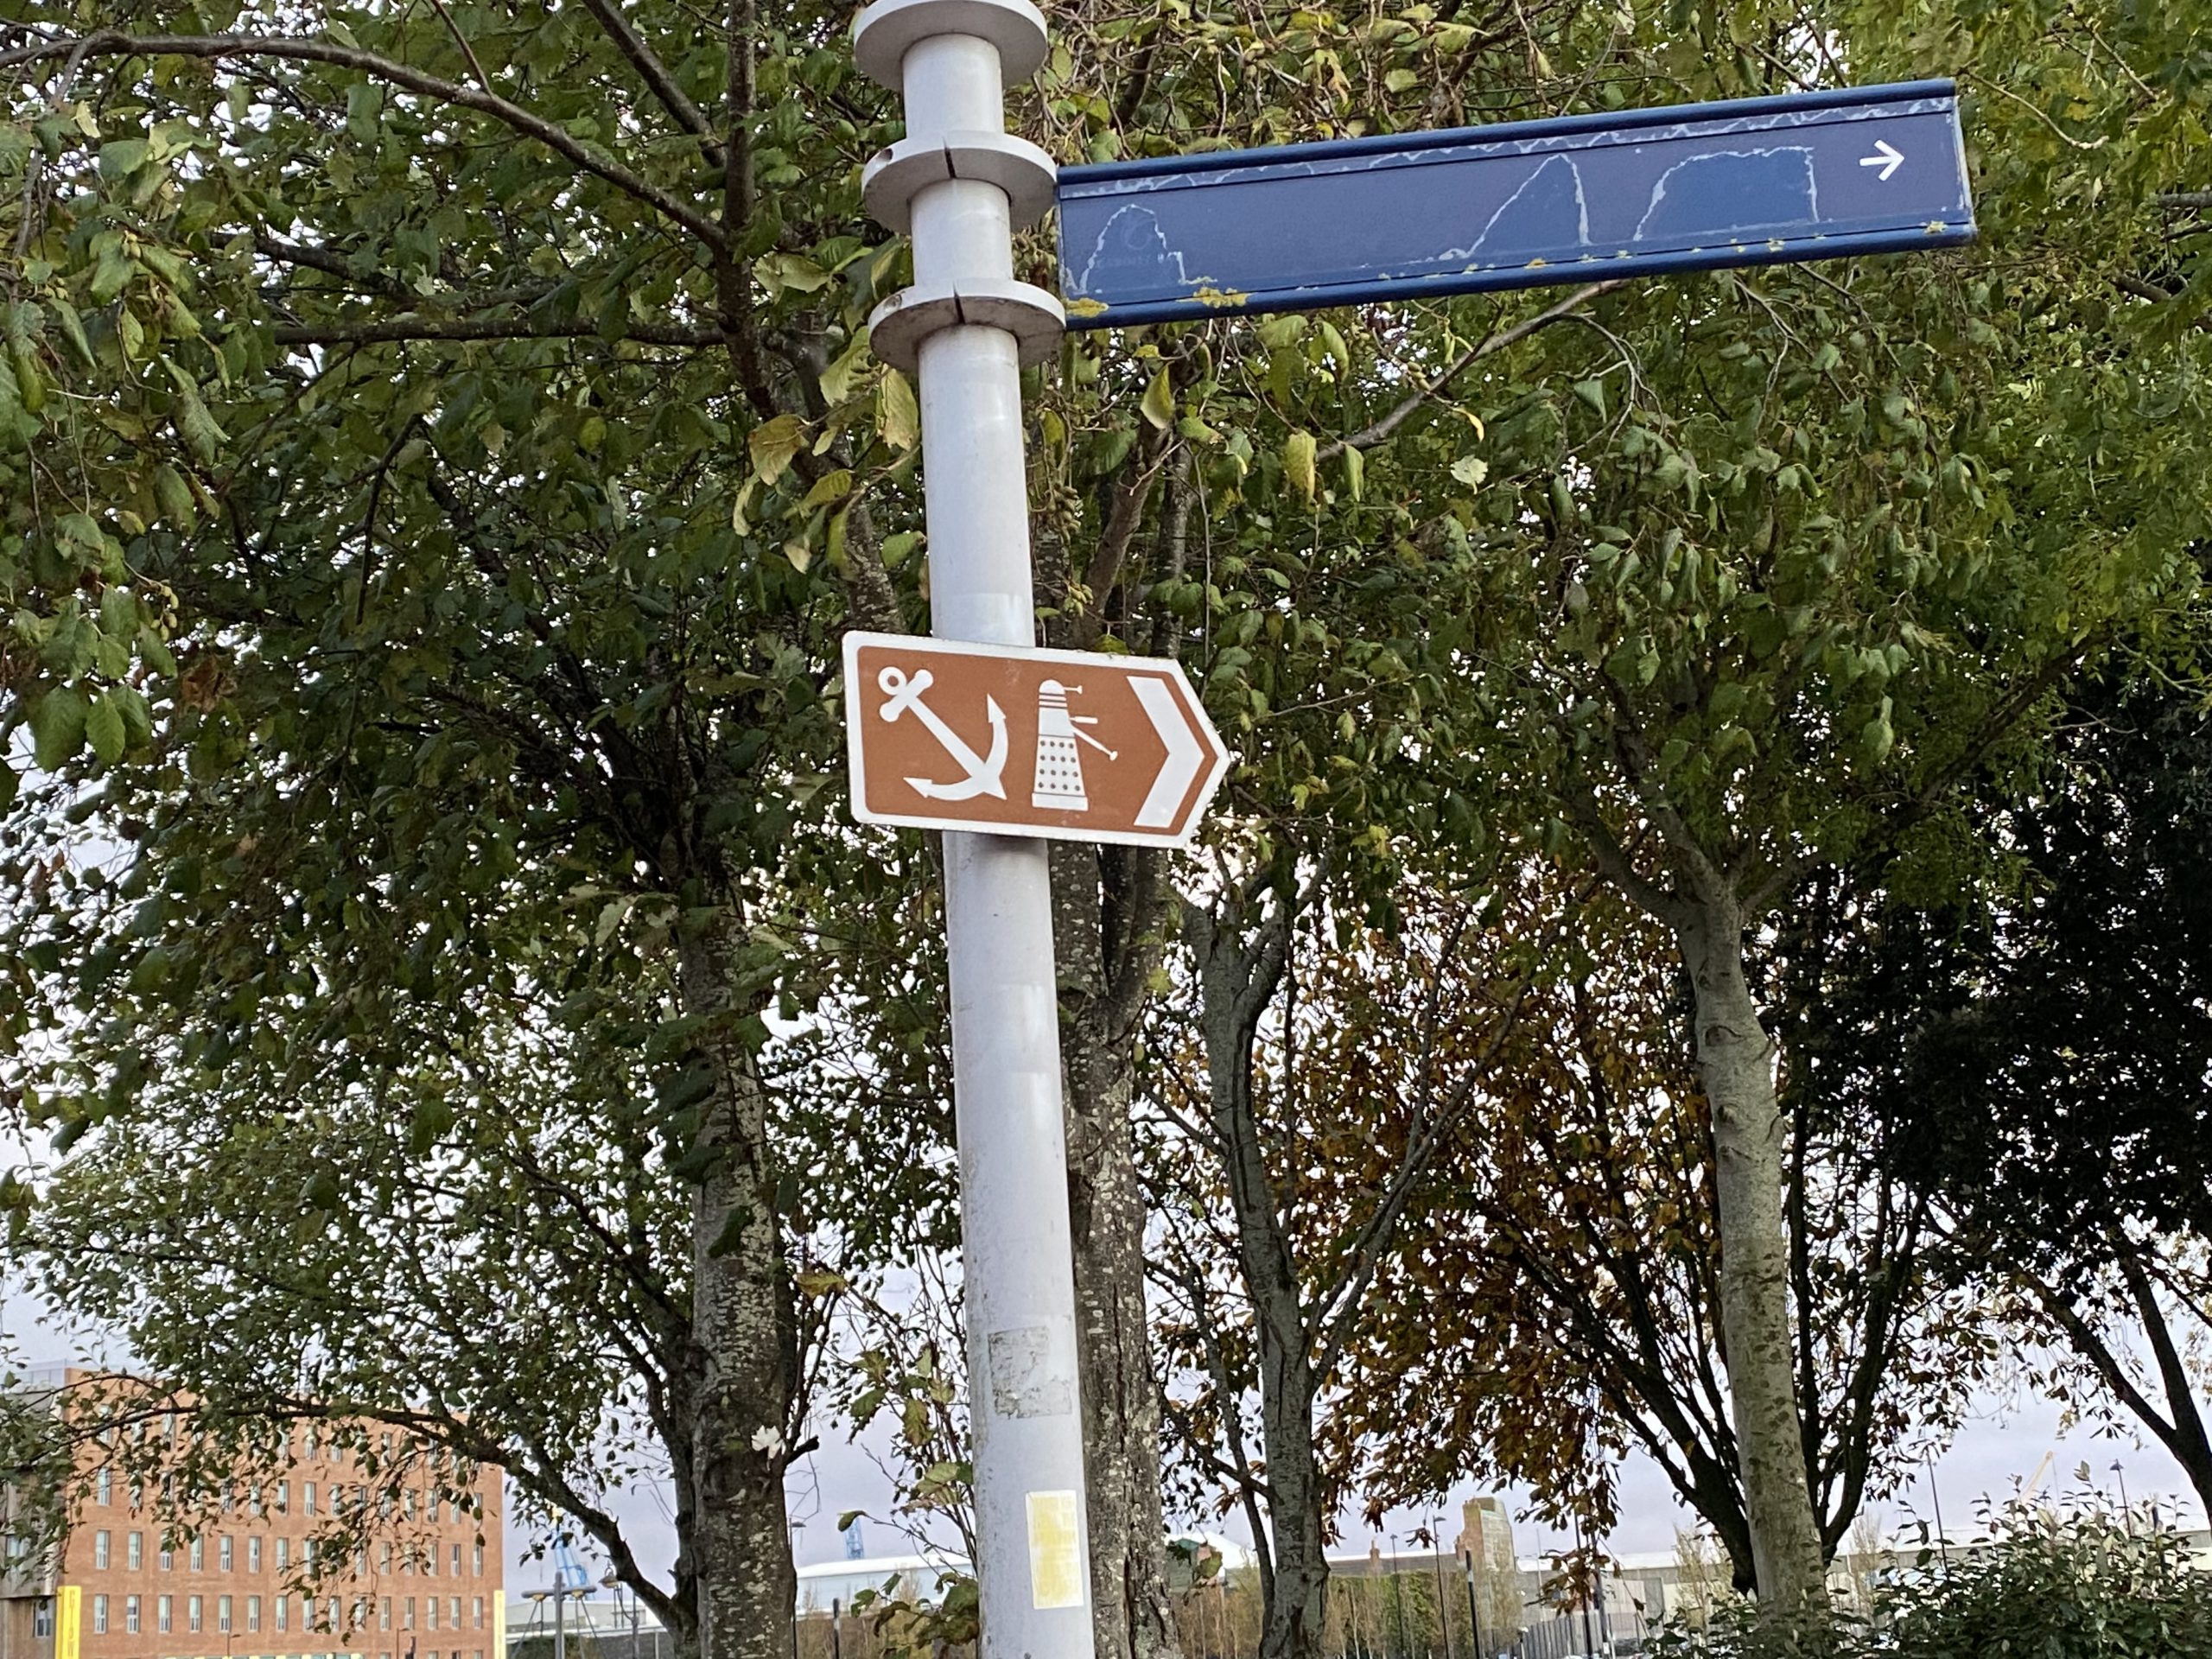 Dalek street sign